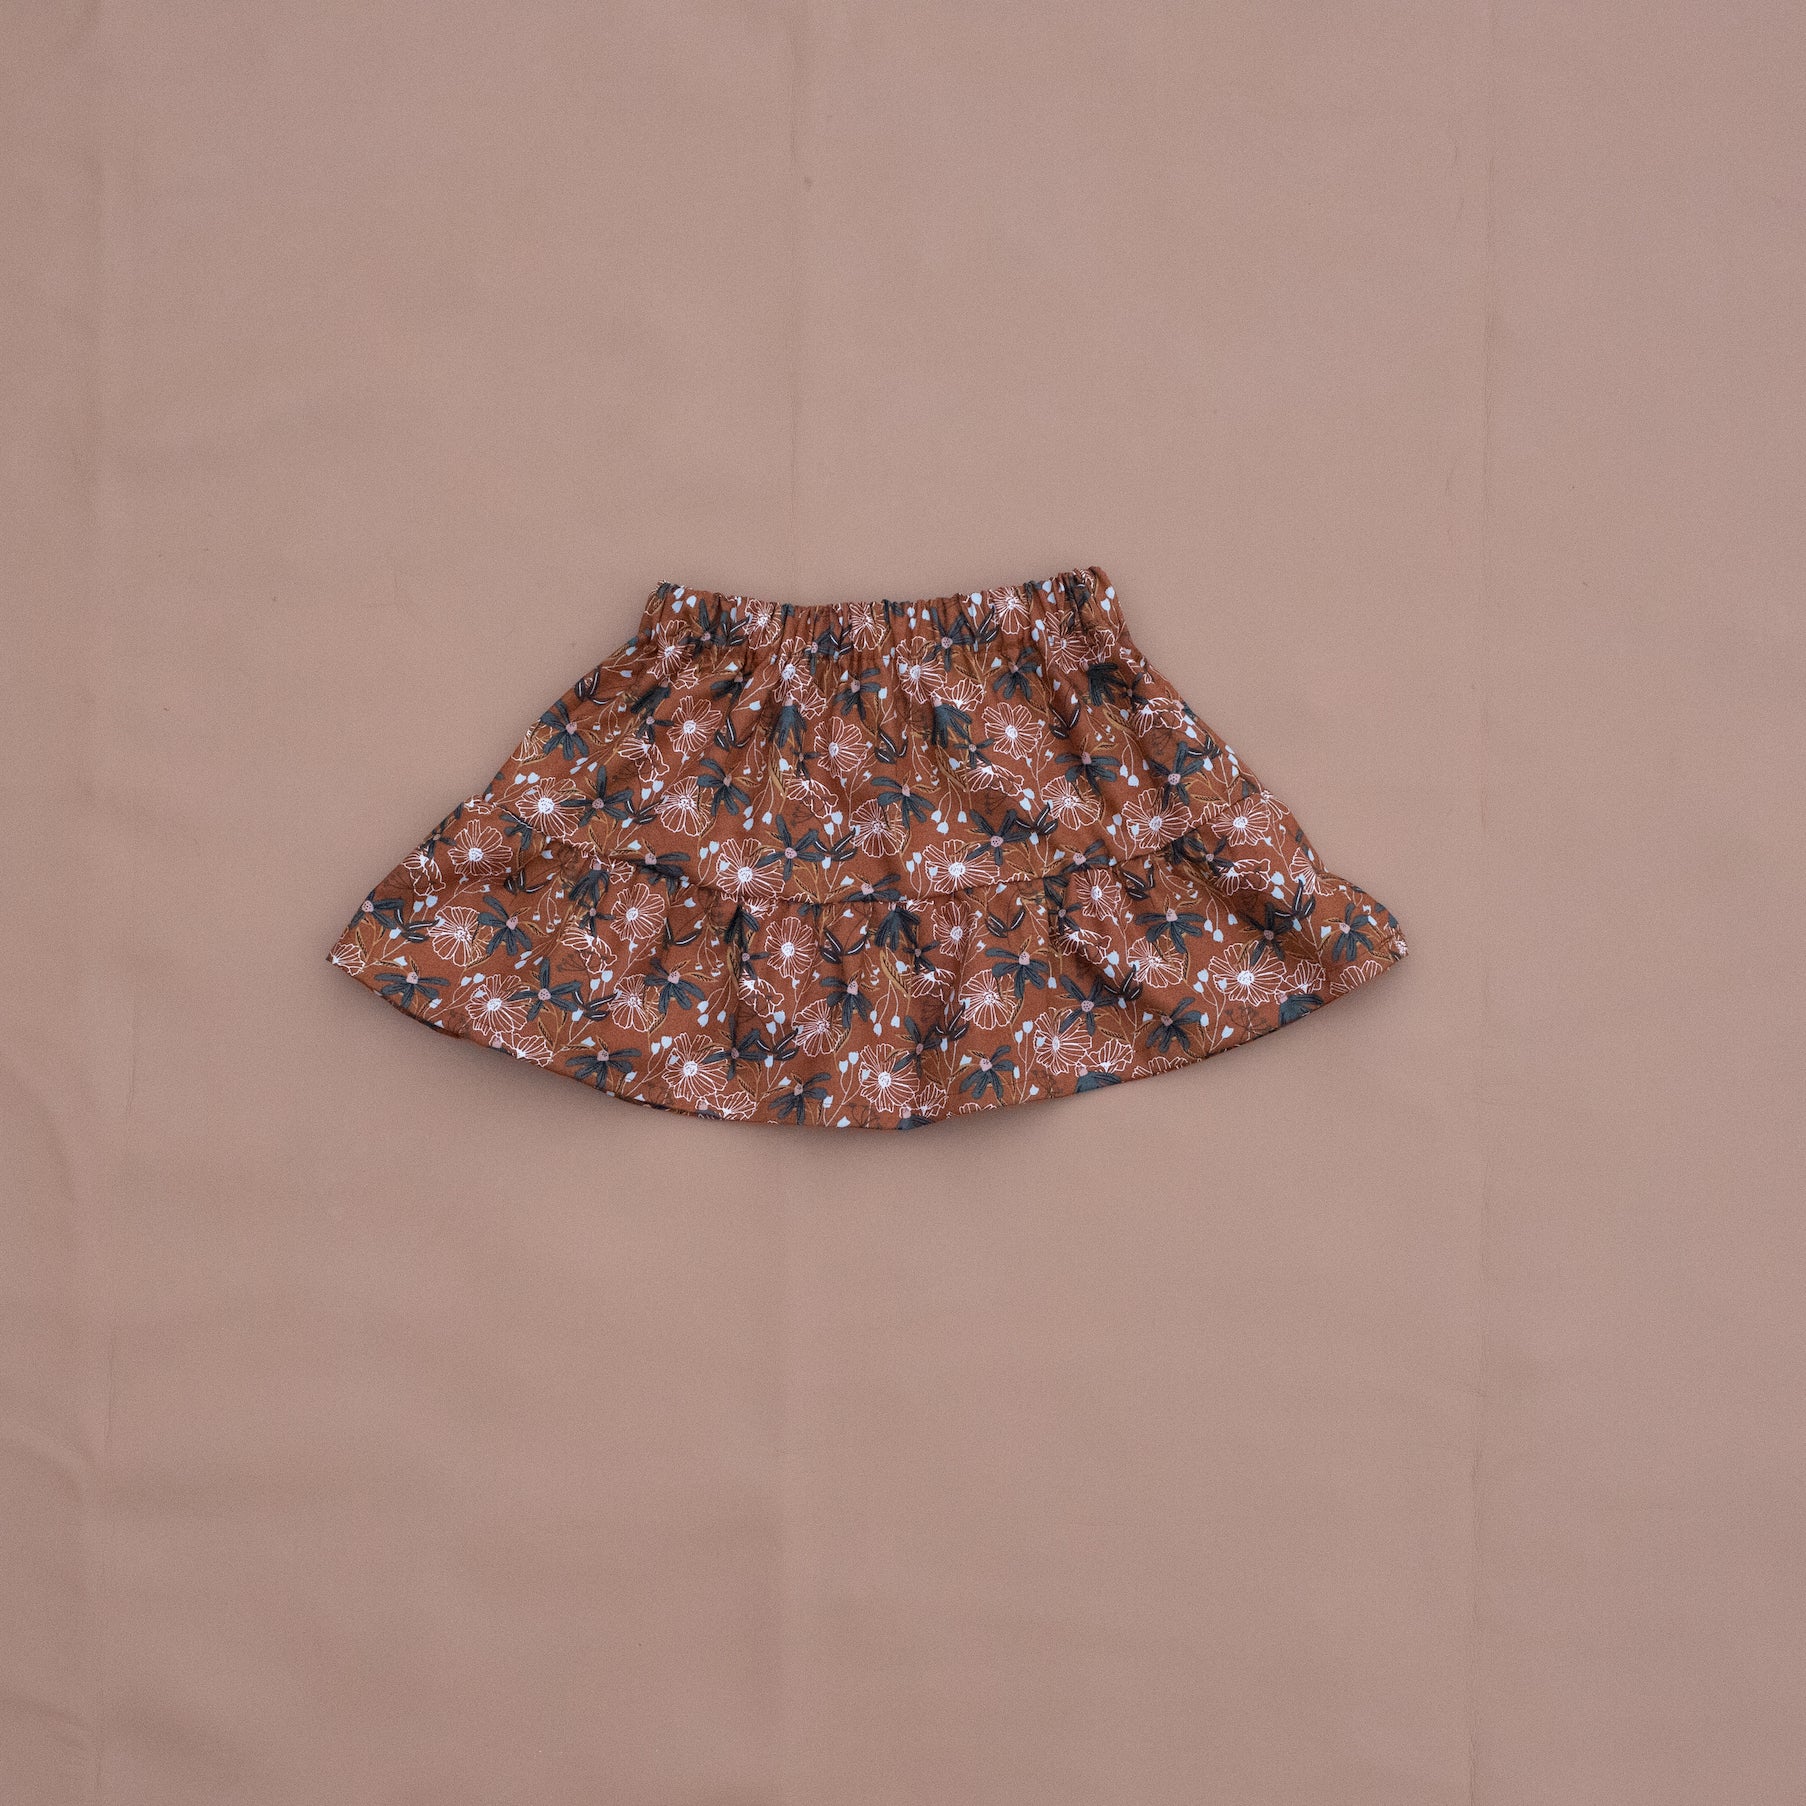 Lennon Skirt - Printed Cotton Skirt with Frill